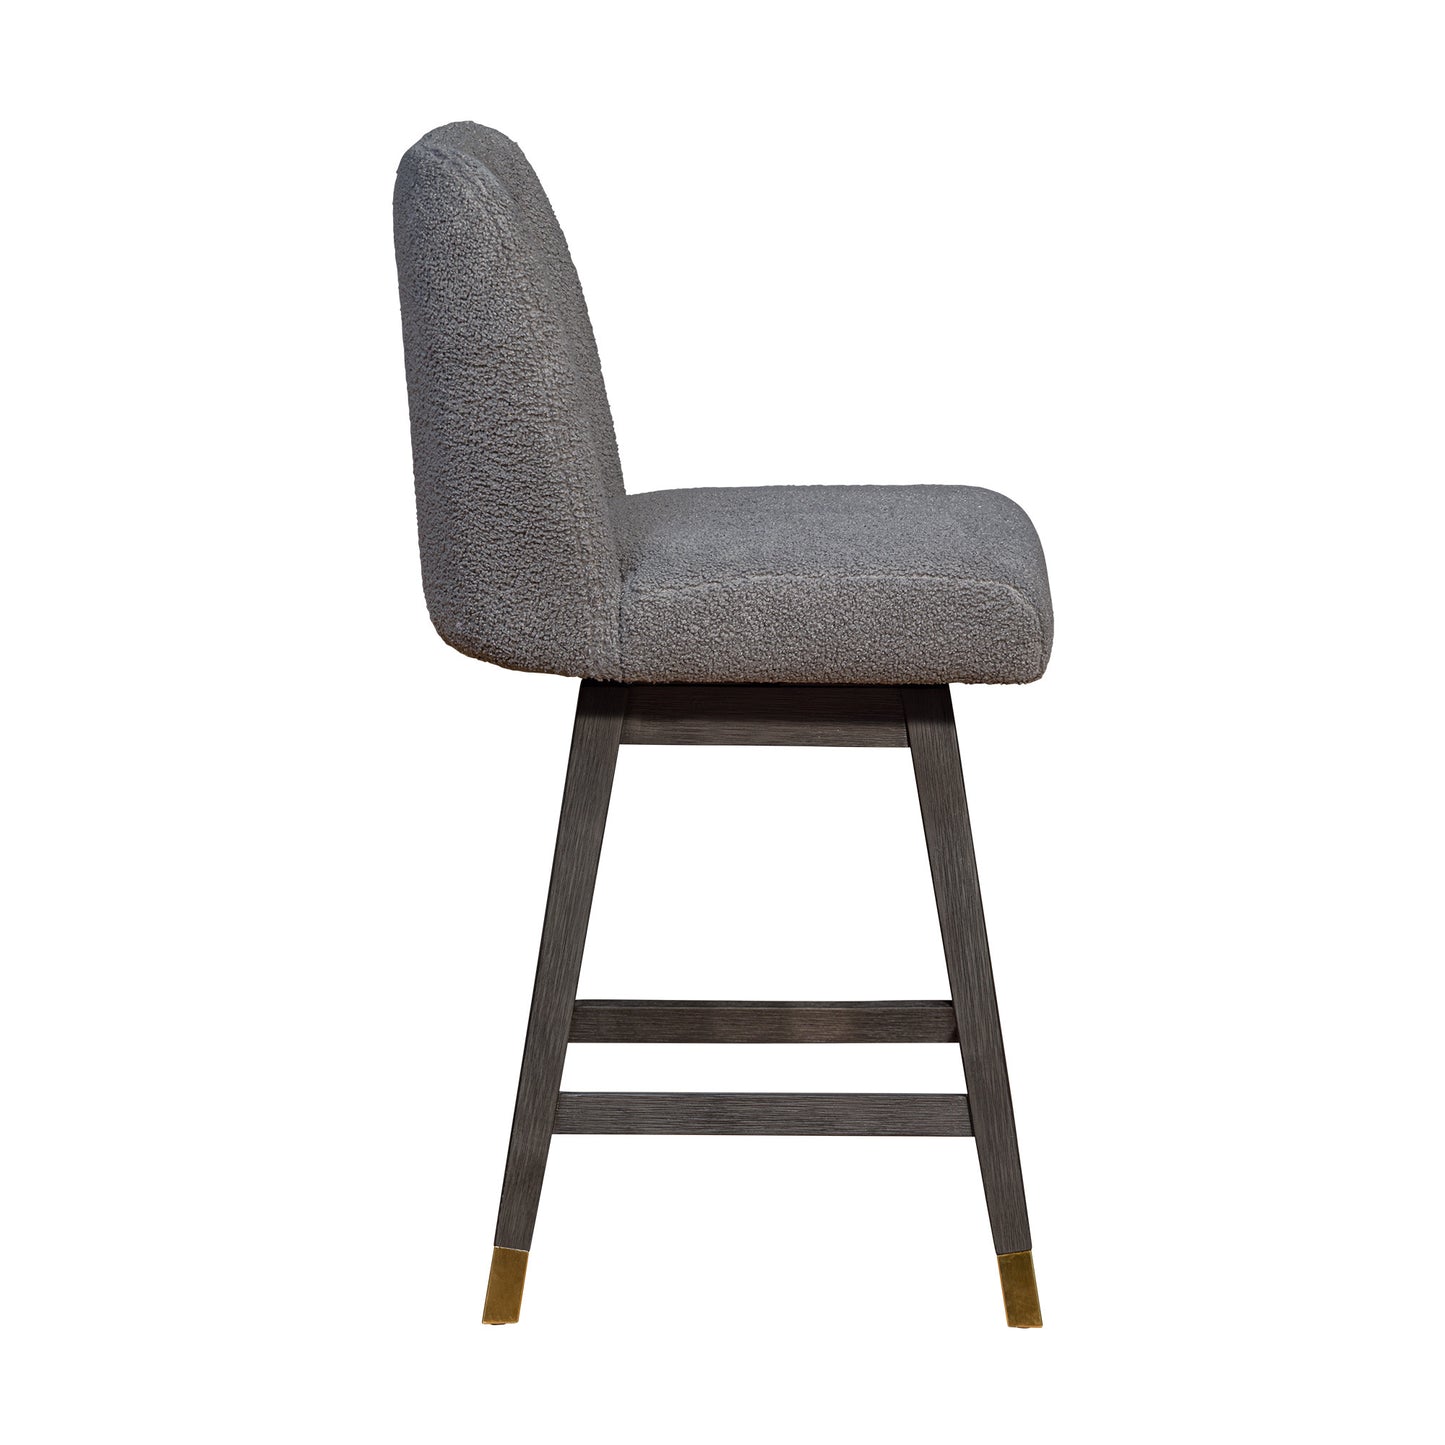 26" Gray Solid Wood Swivel Bar Height Bar Chair